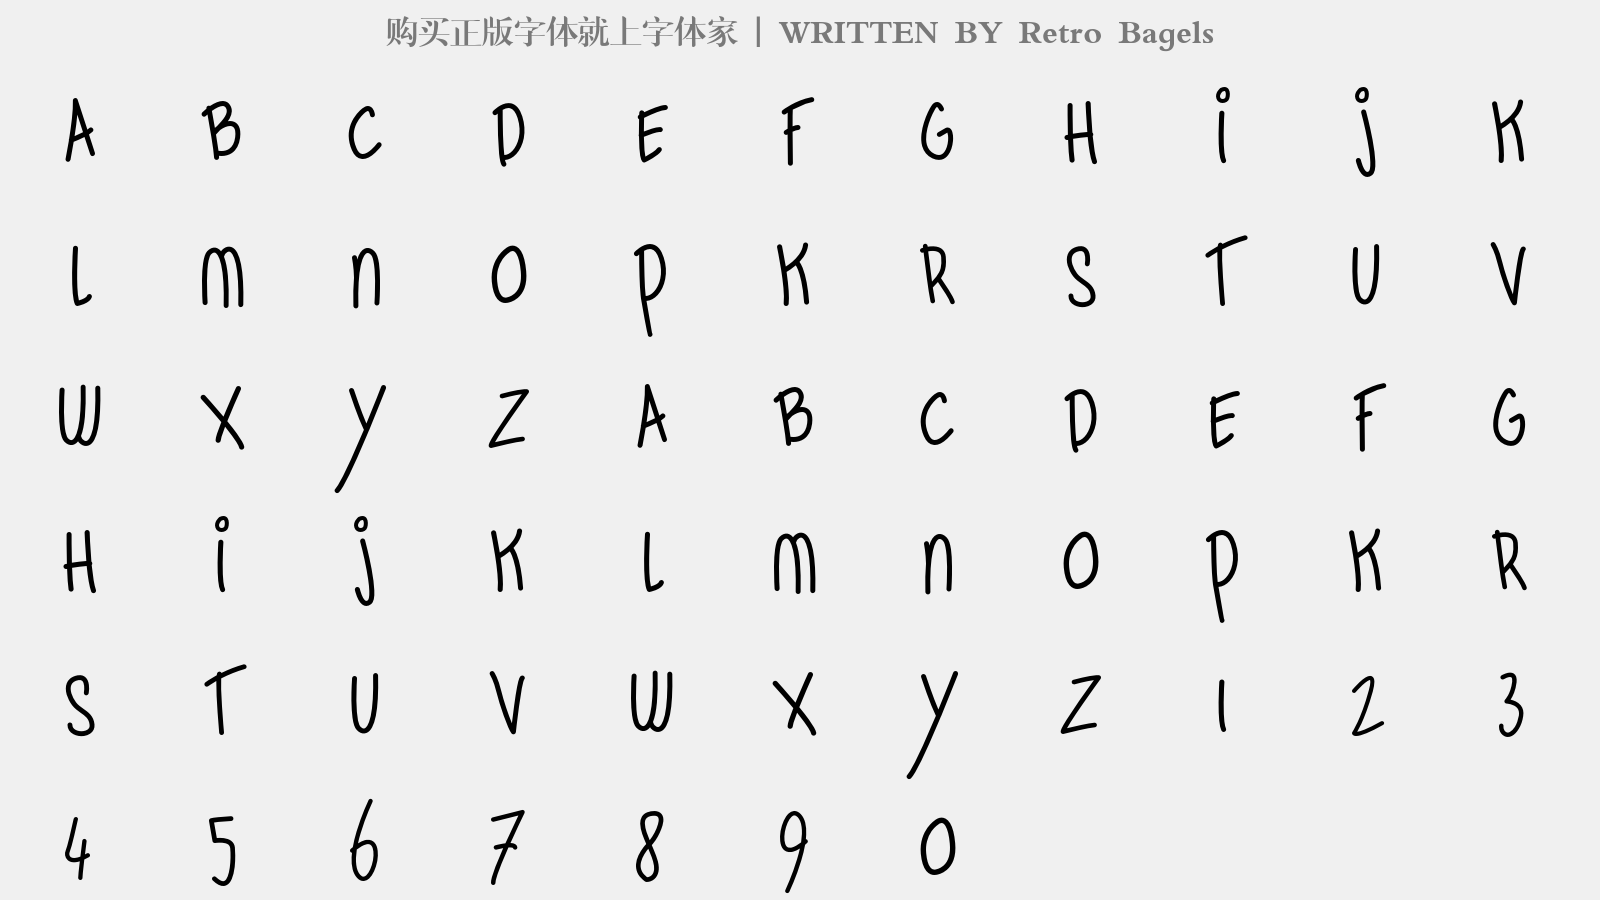 Retro Bagels - 大写字母/小写字母/数字